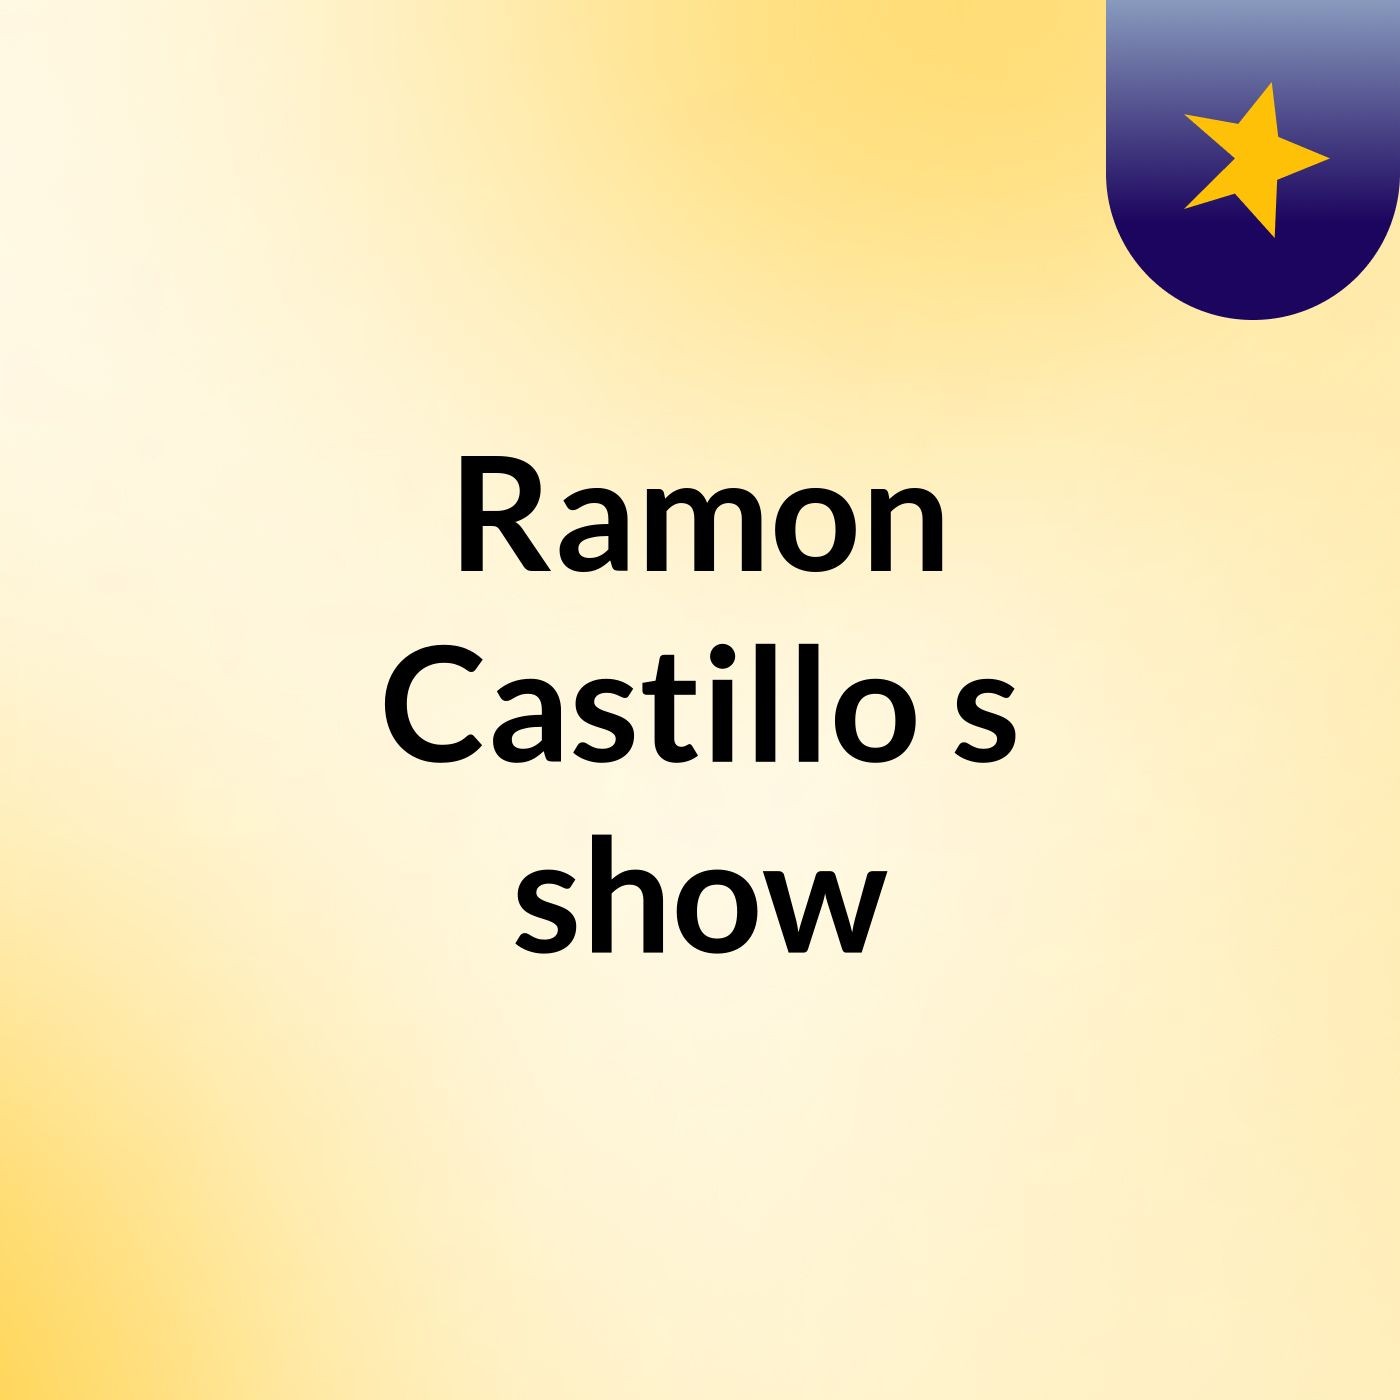 Ramon Castillo's show